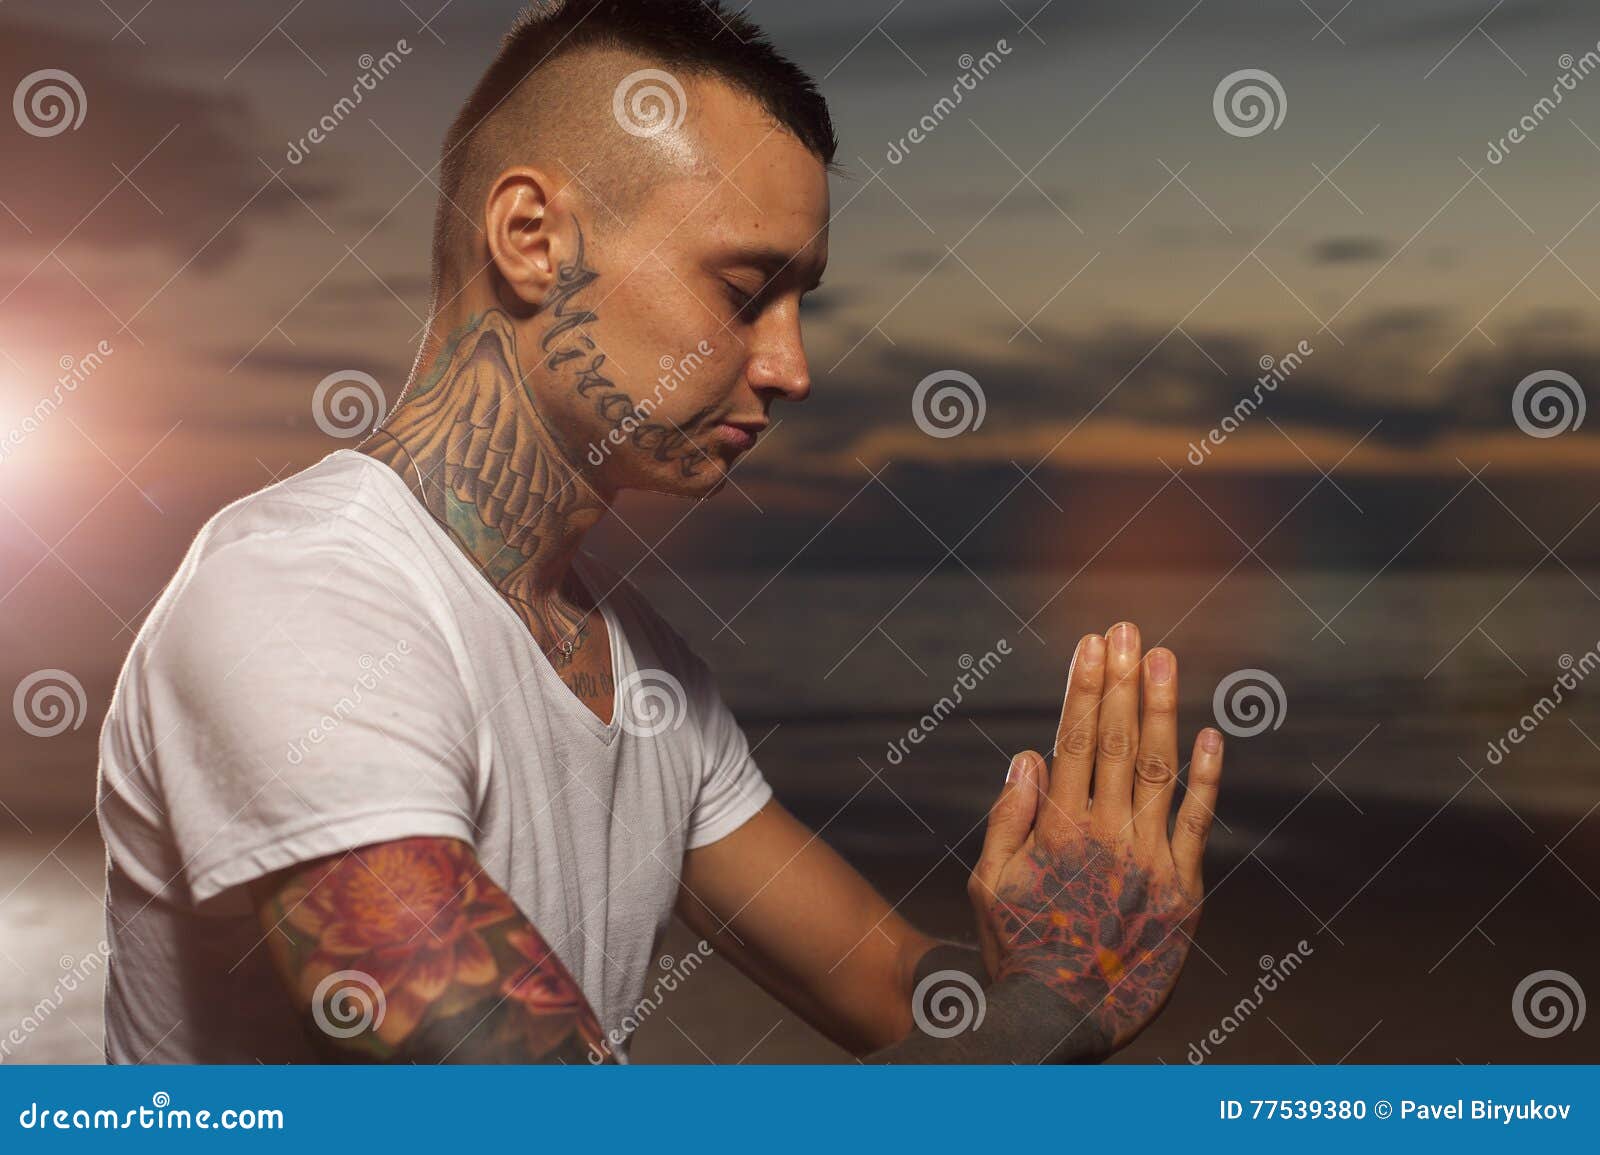 10 Yoga-Based Tattoo Ideas Yogis Are All About Right Now | Yoga tattoos,  Yoga symbols, Tattoos